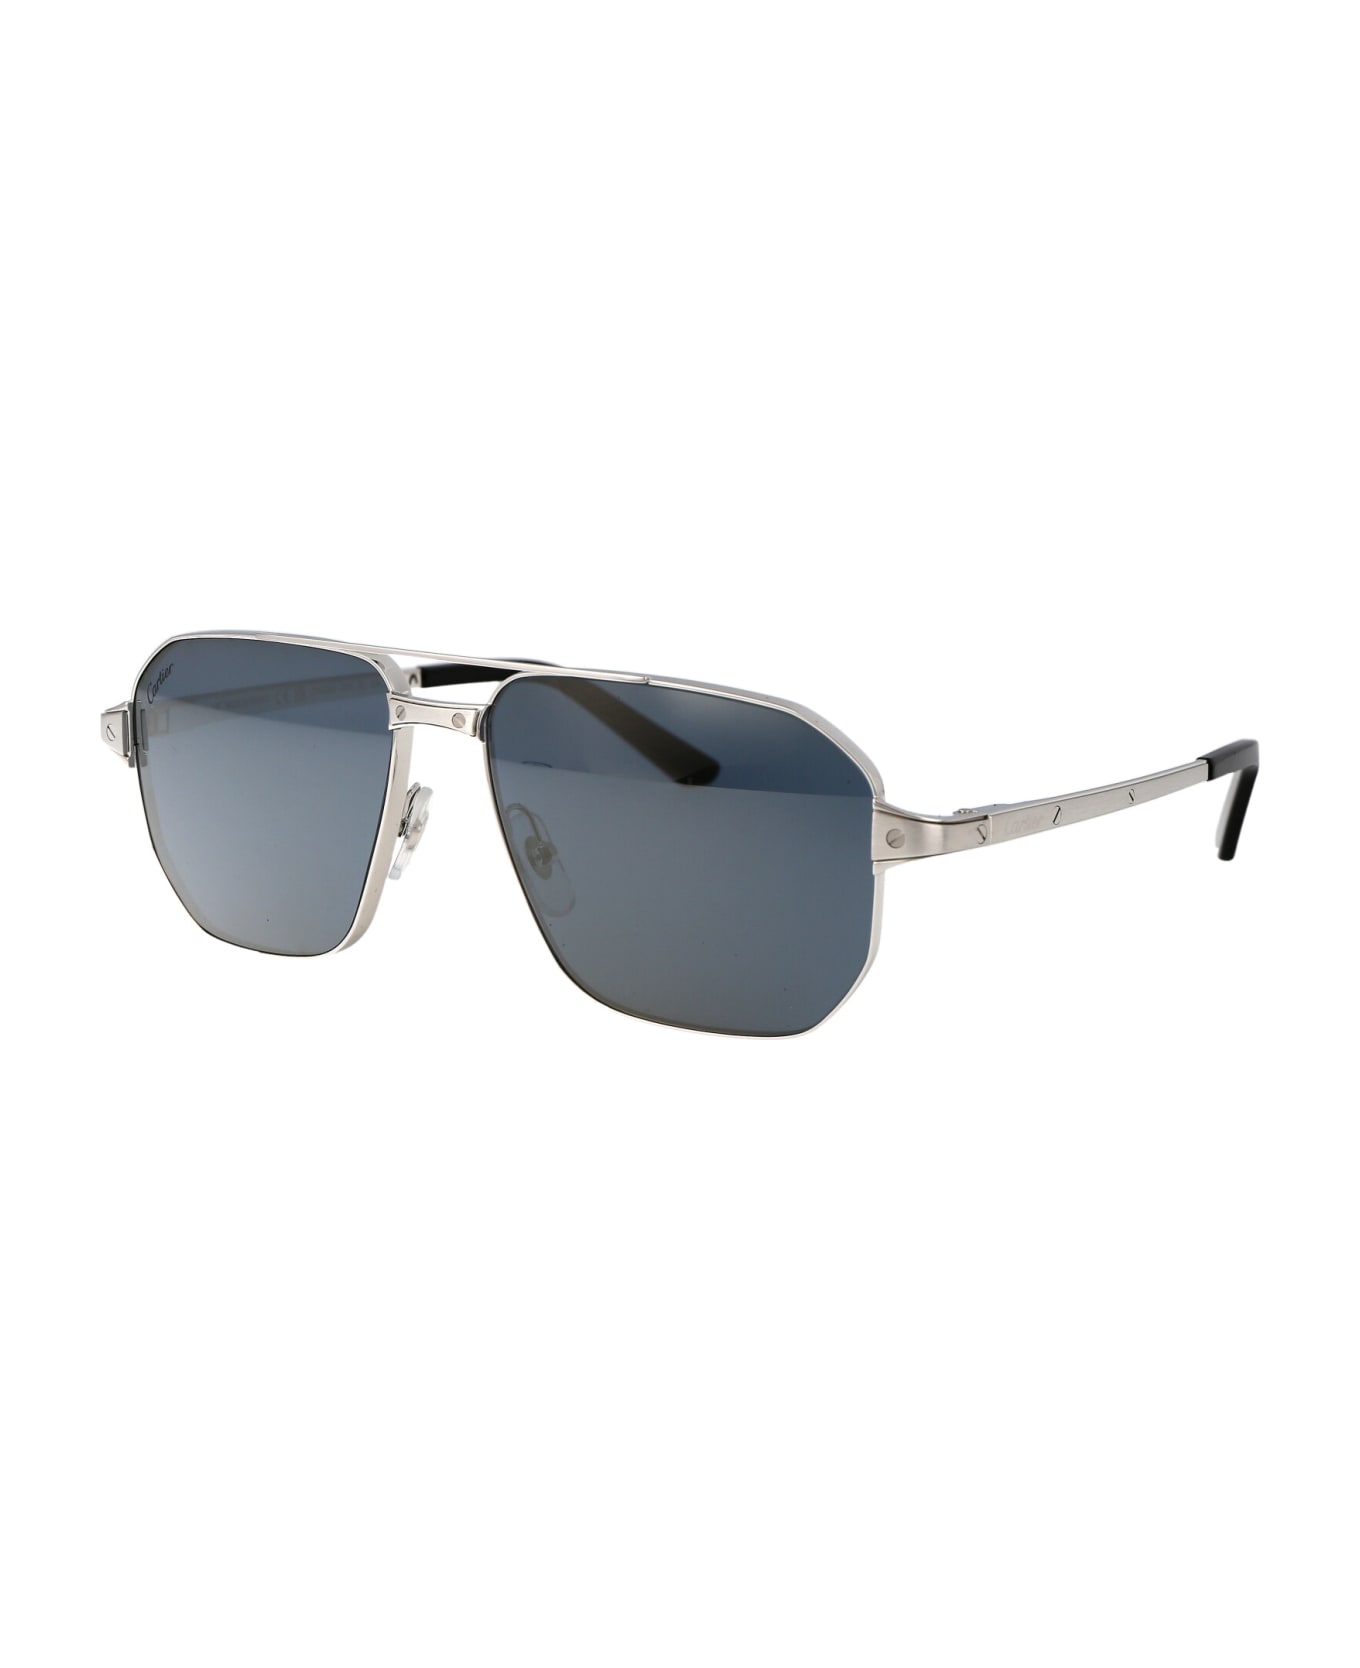 Cartier Eyewear Ct0424s Sunglasses - 004 SILVER SILVER BLUE サングラス